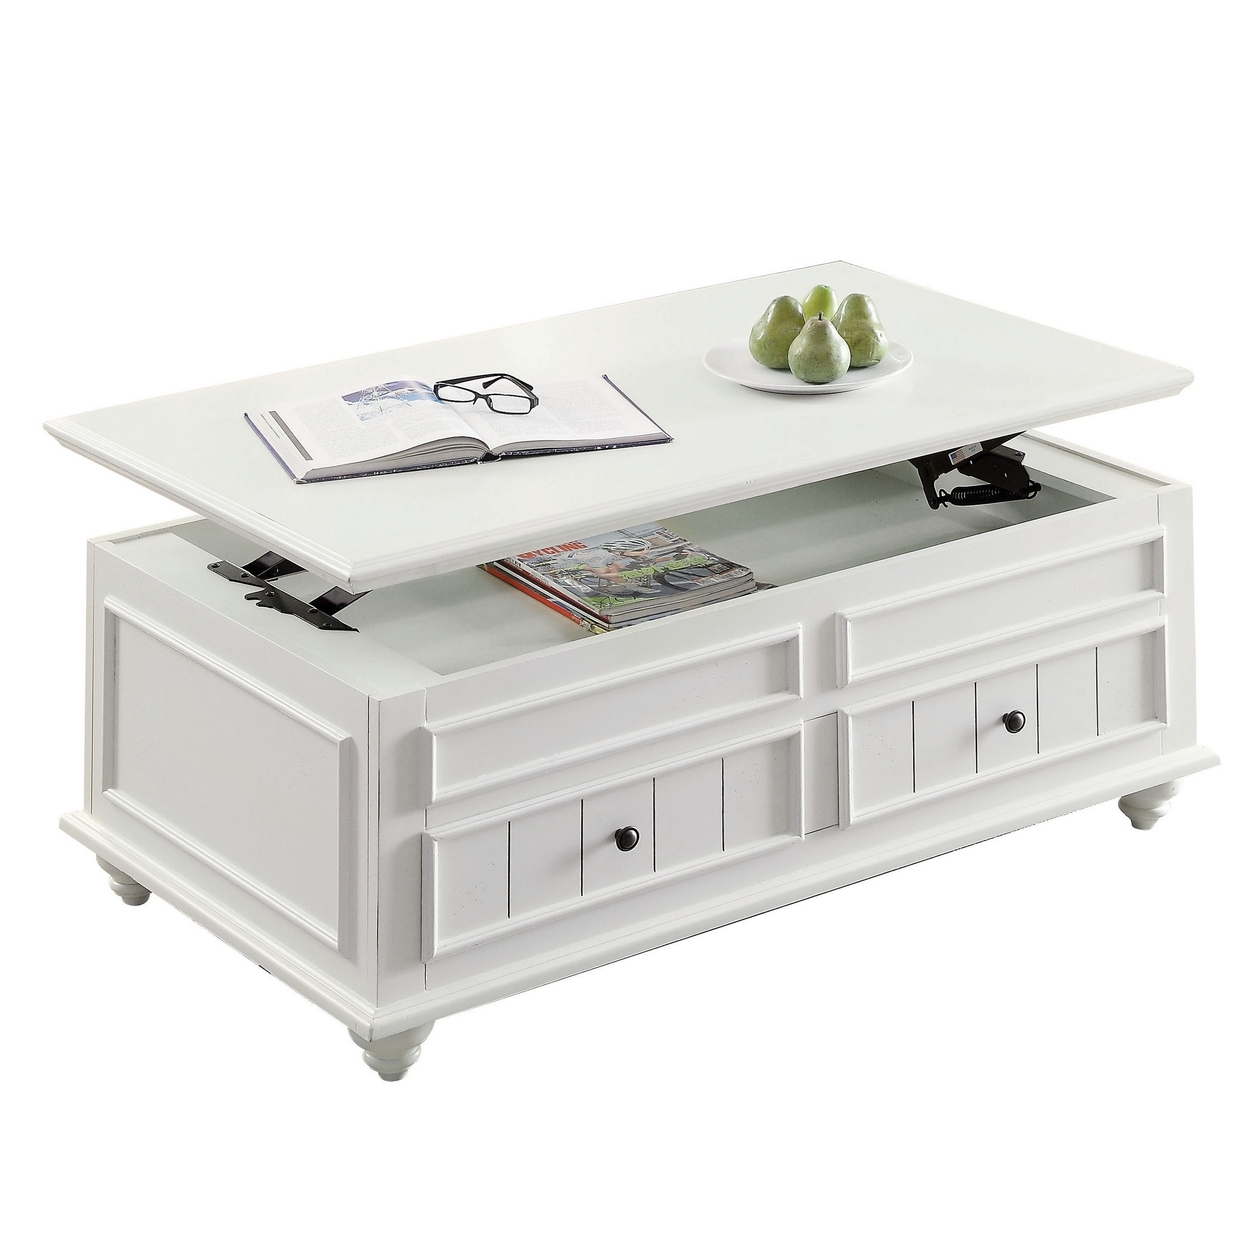 48 Inch Coffee Table, Lift Top Function, 2 Drawers, White Poplar Wood - Saltoro Sherpi